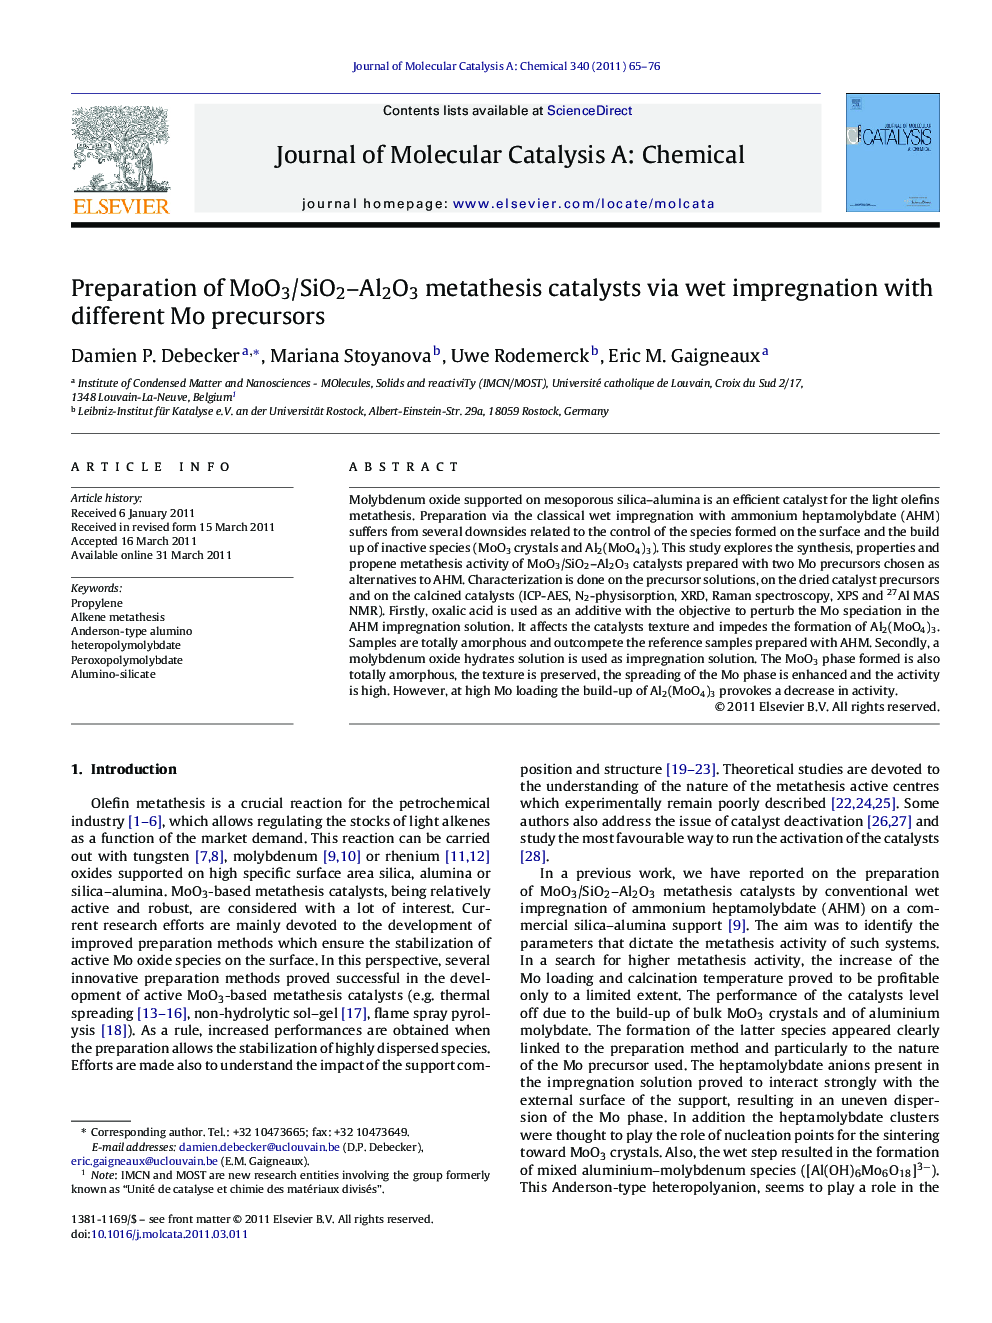 Preparation of MoO3/SiO2–Al2O3 metathesis catalysts via wet impregnation with different Mo precursors